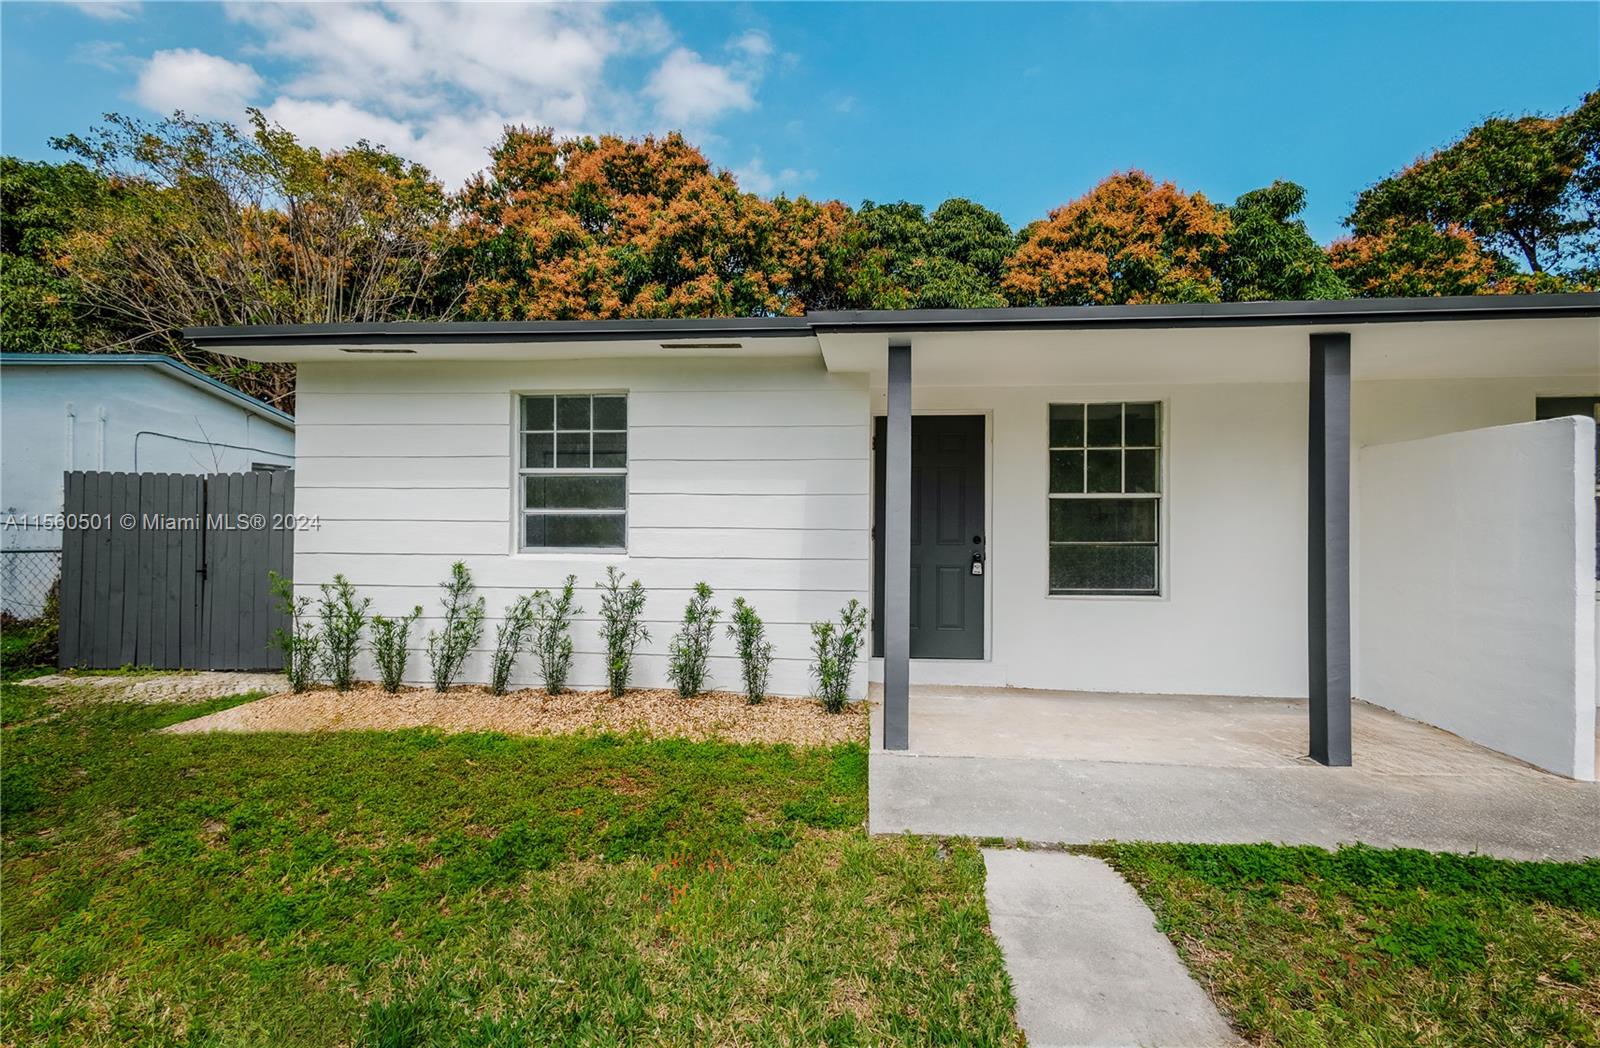 Rental Property at 20601 Manta Dr, Cutler Bay, Miami-Dade County, Florida -  - $649,000 MO.